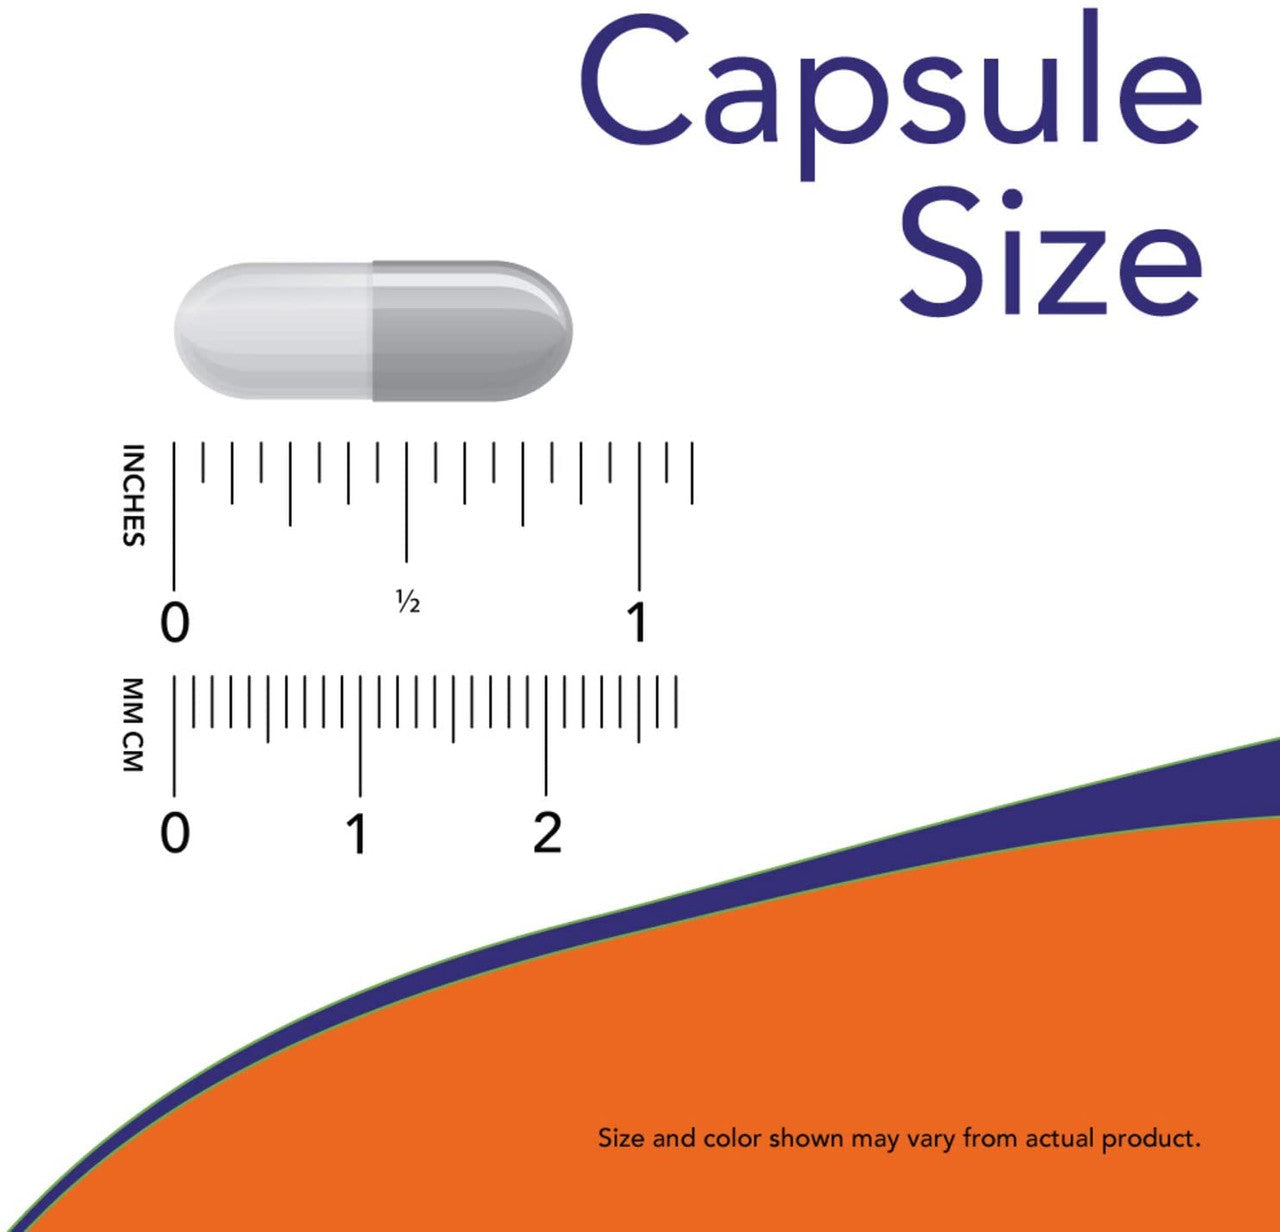 Now St. John's Wort capsule size